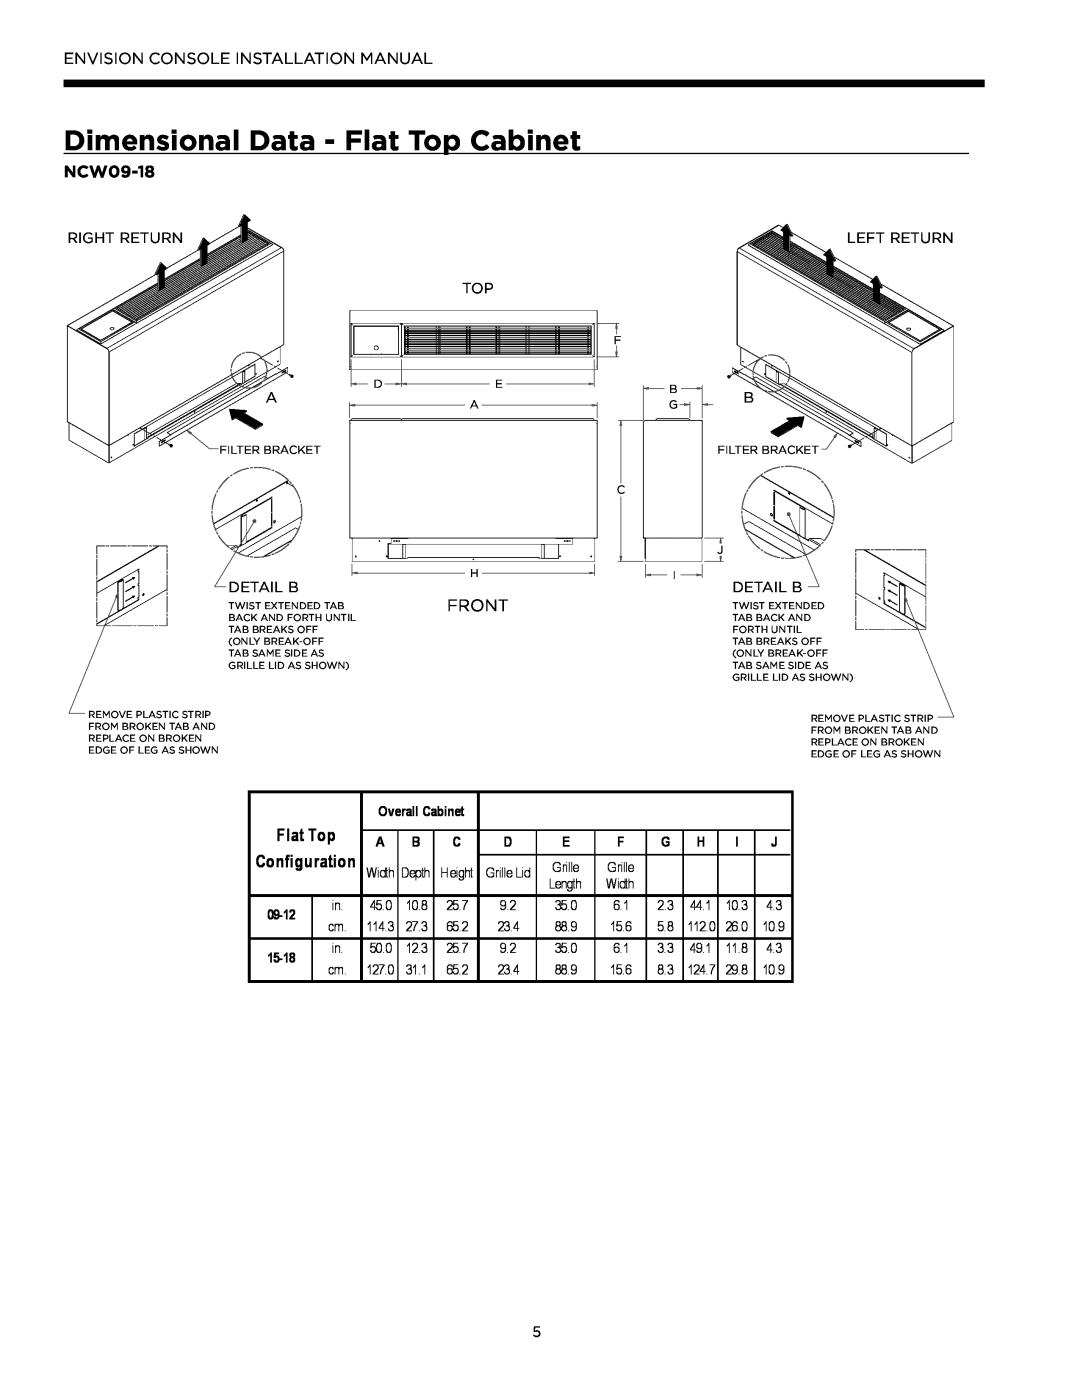 Envision Peripherals IM1609 08, IM1609 10 installation manual Dimensional Data - Flat Top Cabinet, NCW09-18, Configuration 